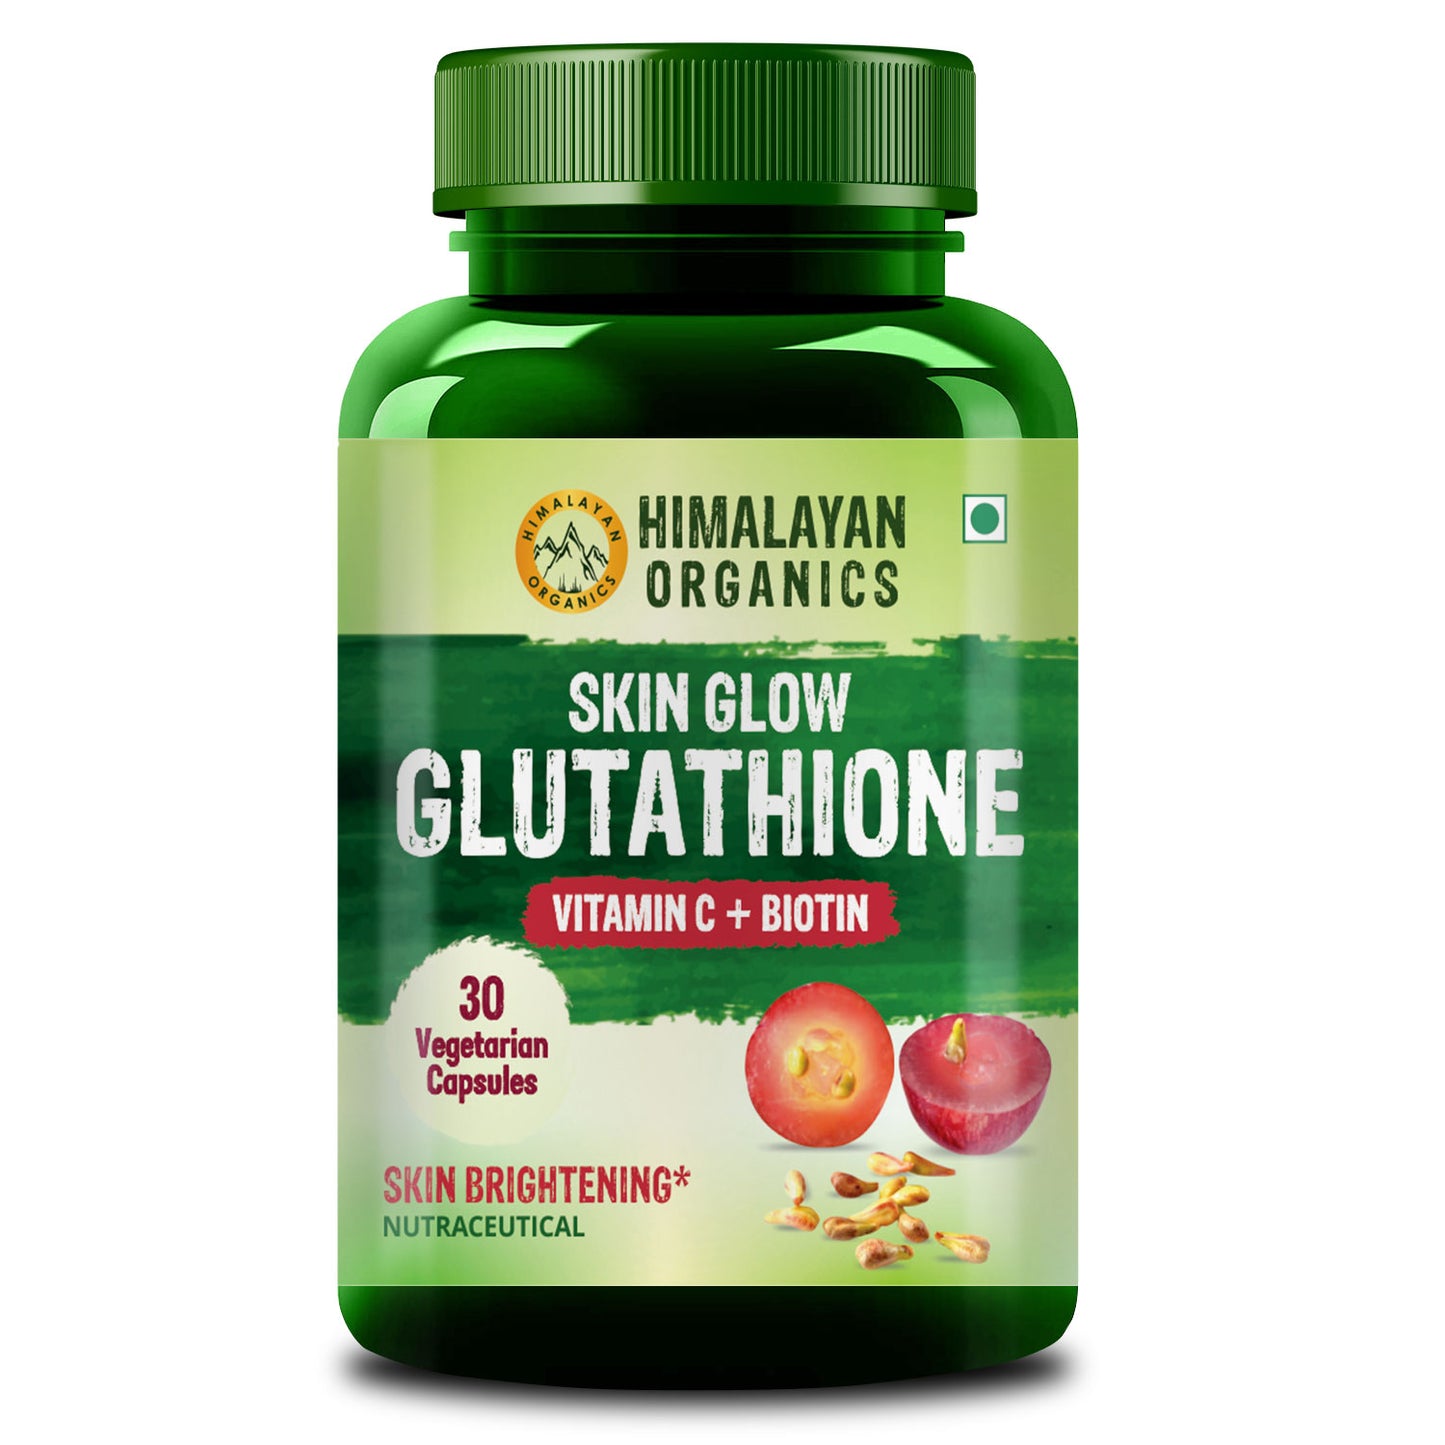 Himalayan Organics Skin Glow Glutathione with Vitamin C & Biotin | For Healthy, Glowing & Brightening Skin - 30 Capsules